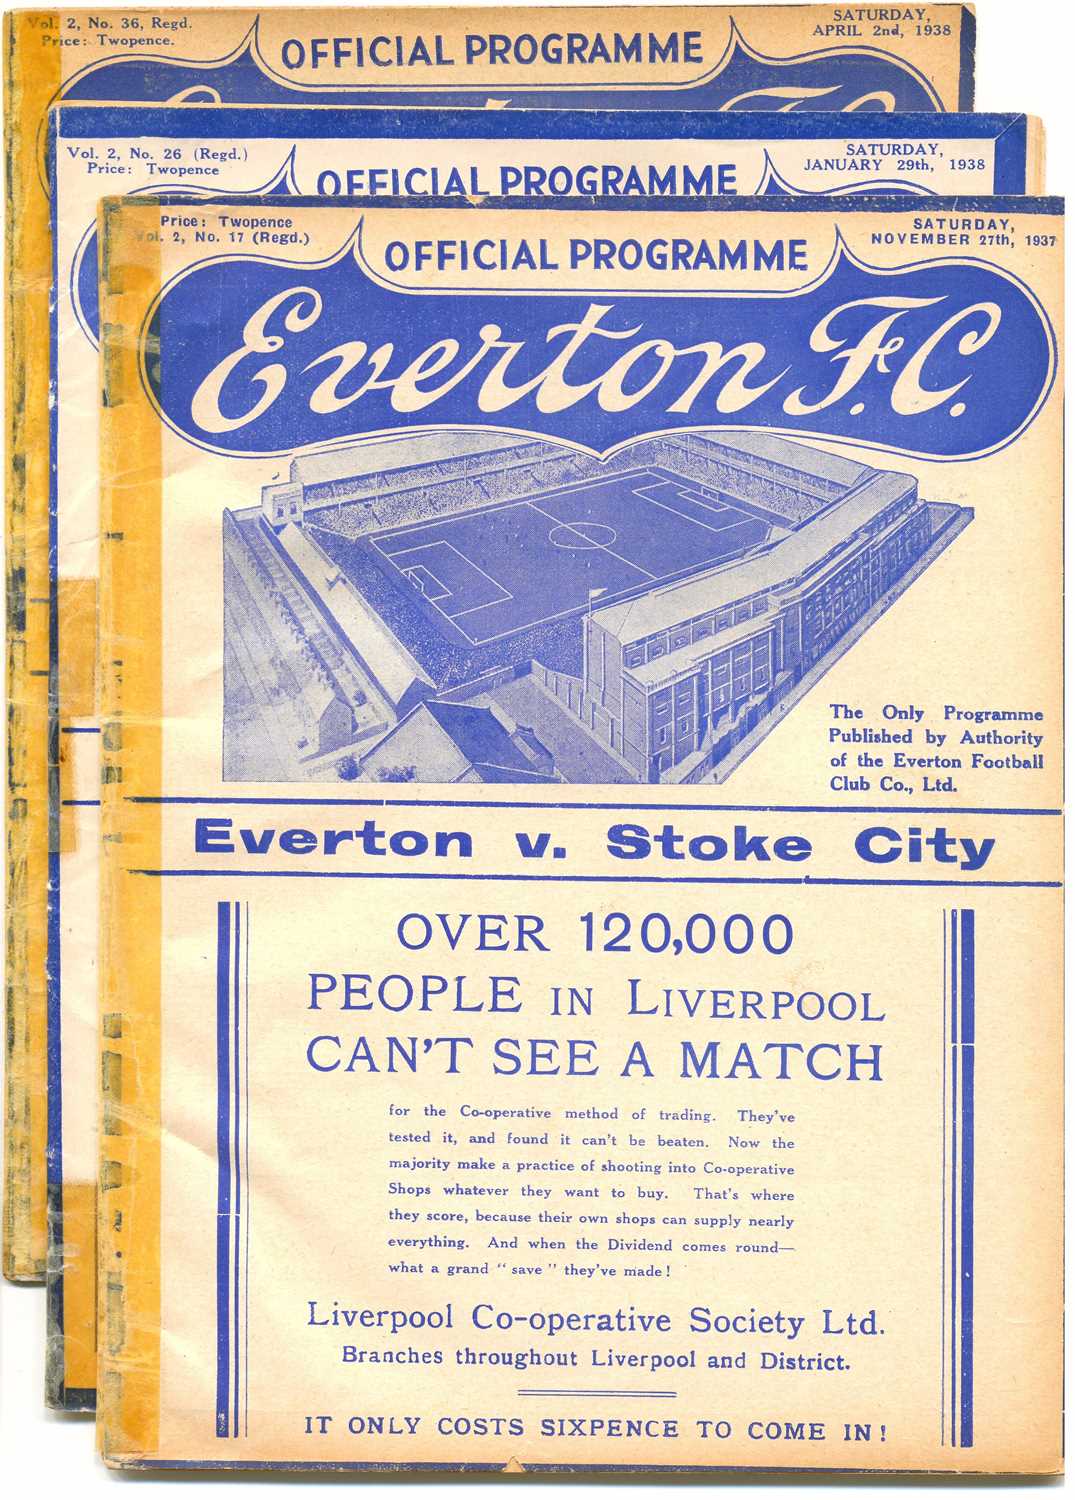 Lot Three Everton Football Club home programmes